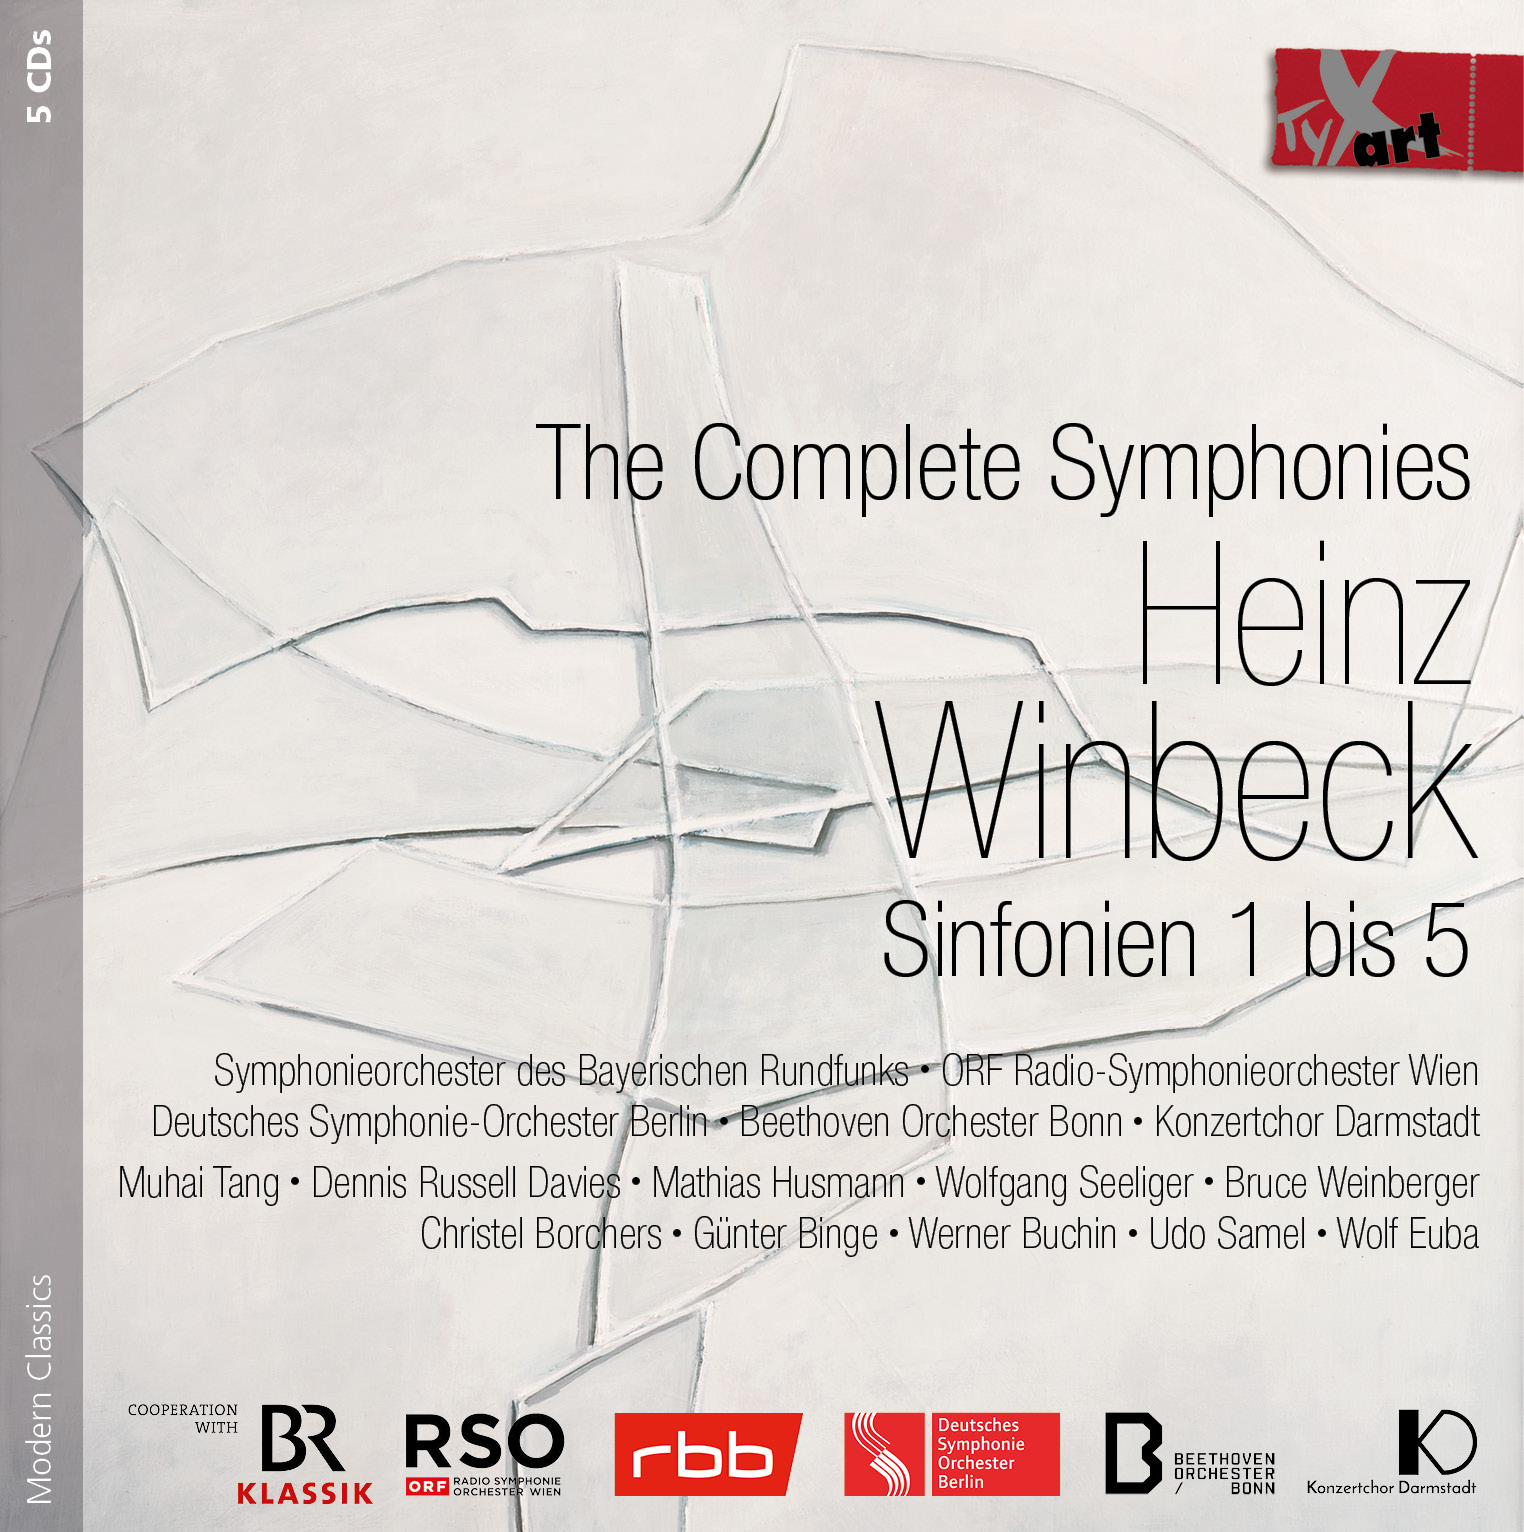 Heinz Winbeck The Complete Symphonies